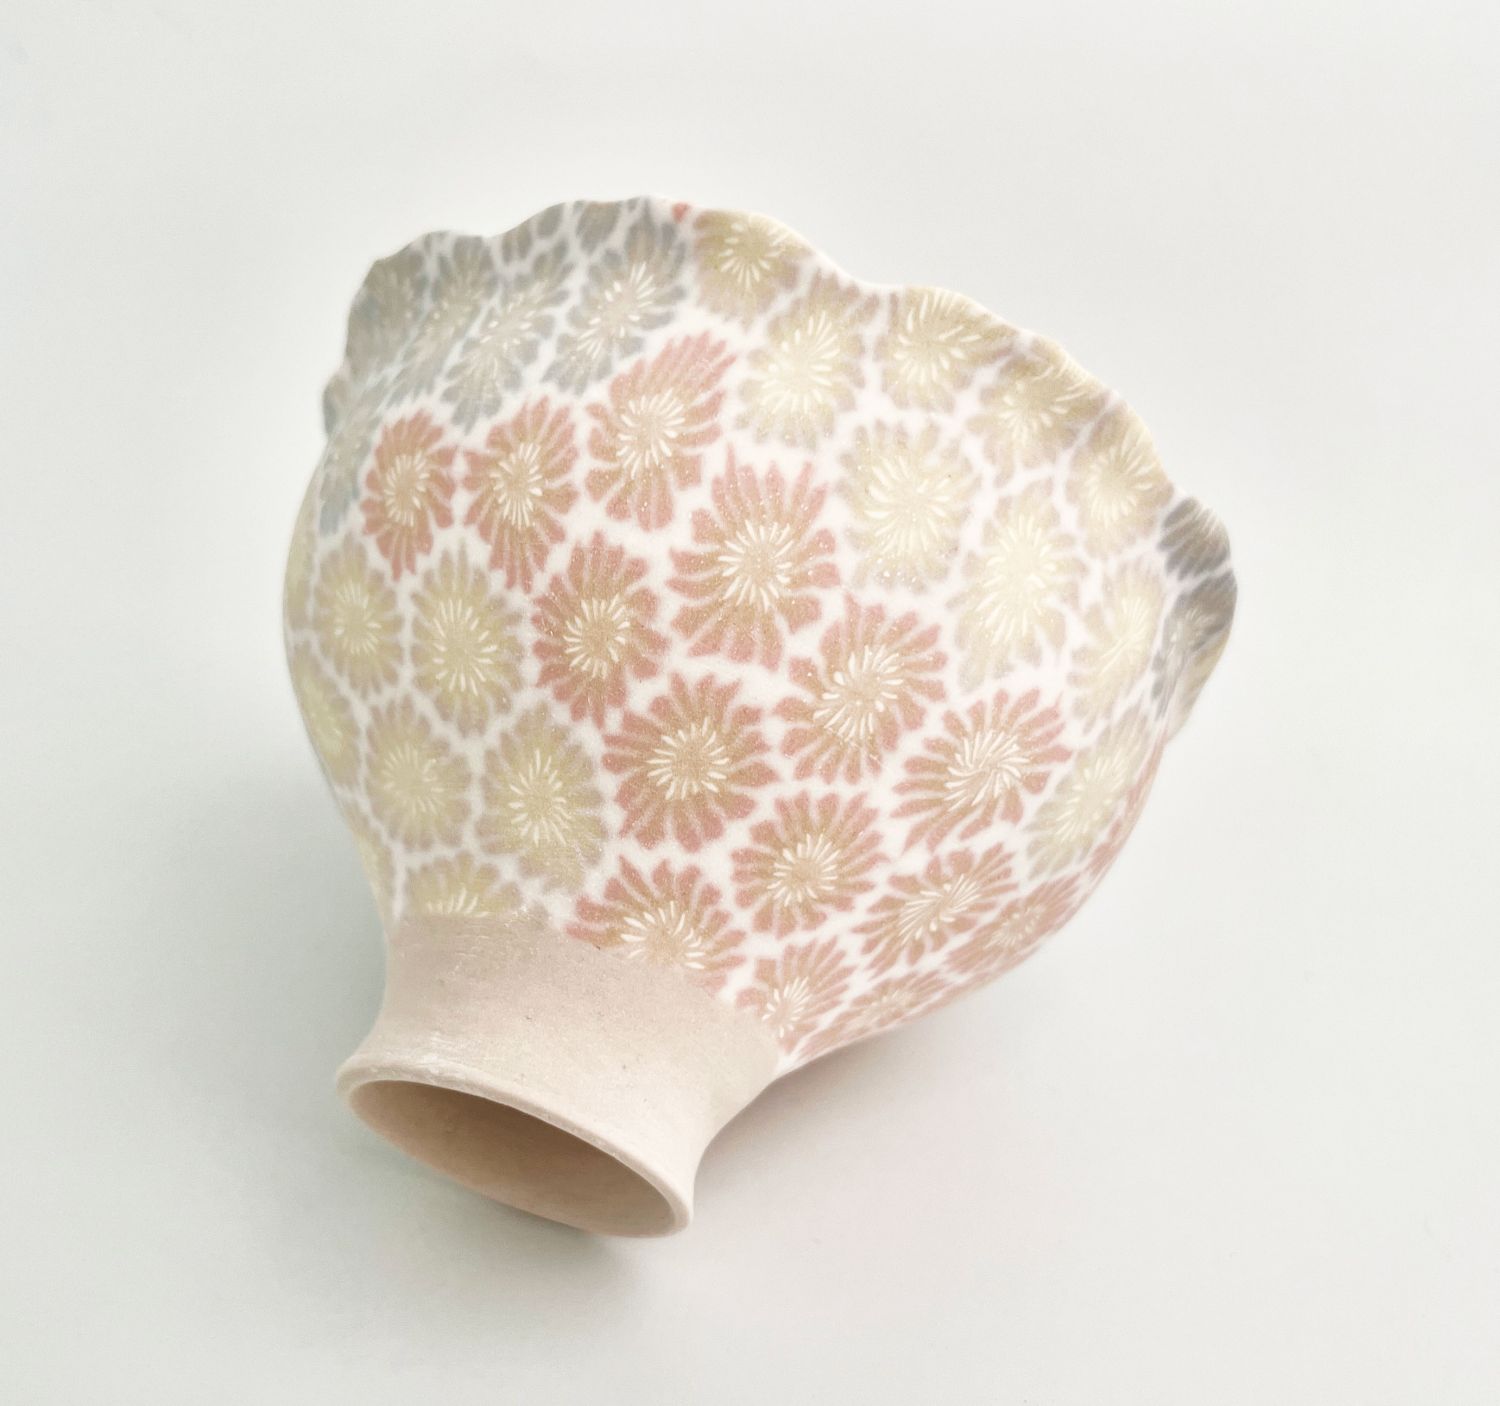 Eiko Maeda: Purple and Pink Bowl Product Image 2 of 2